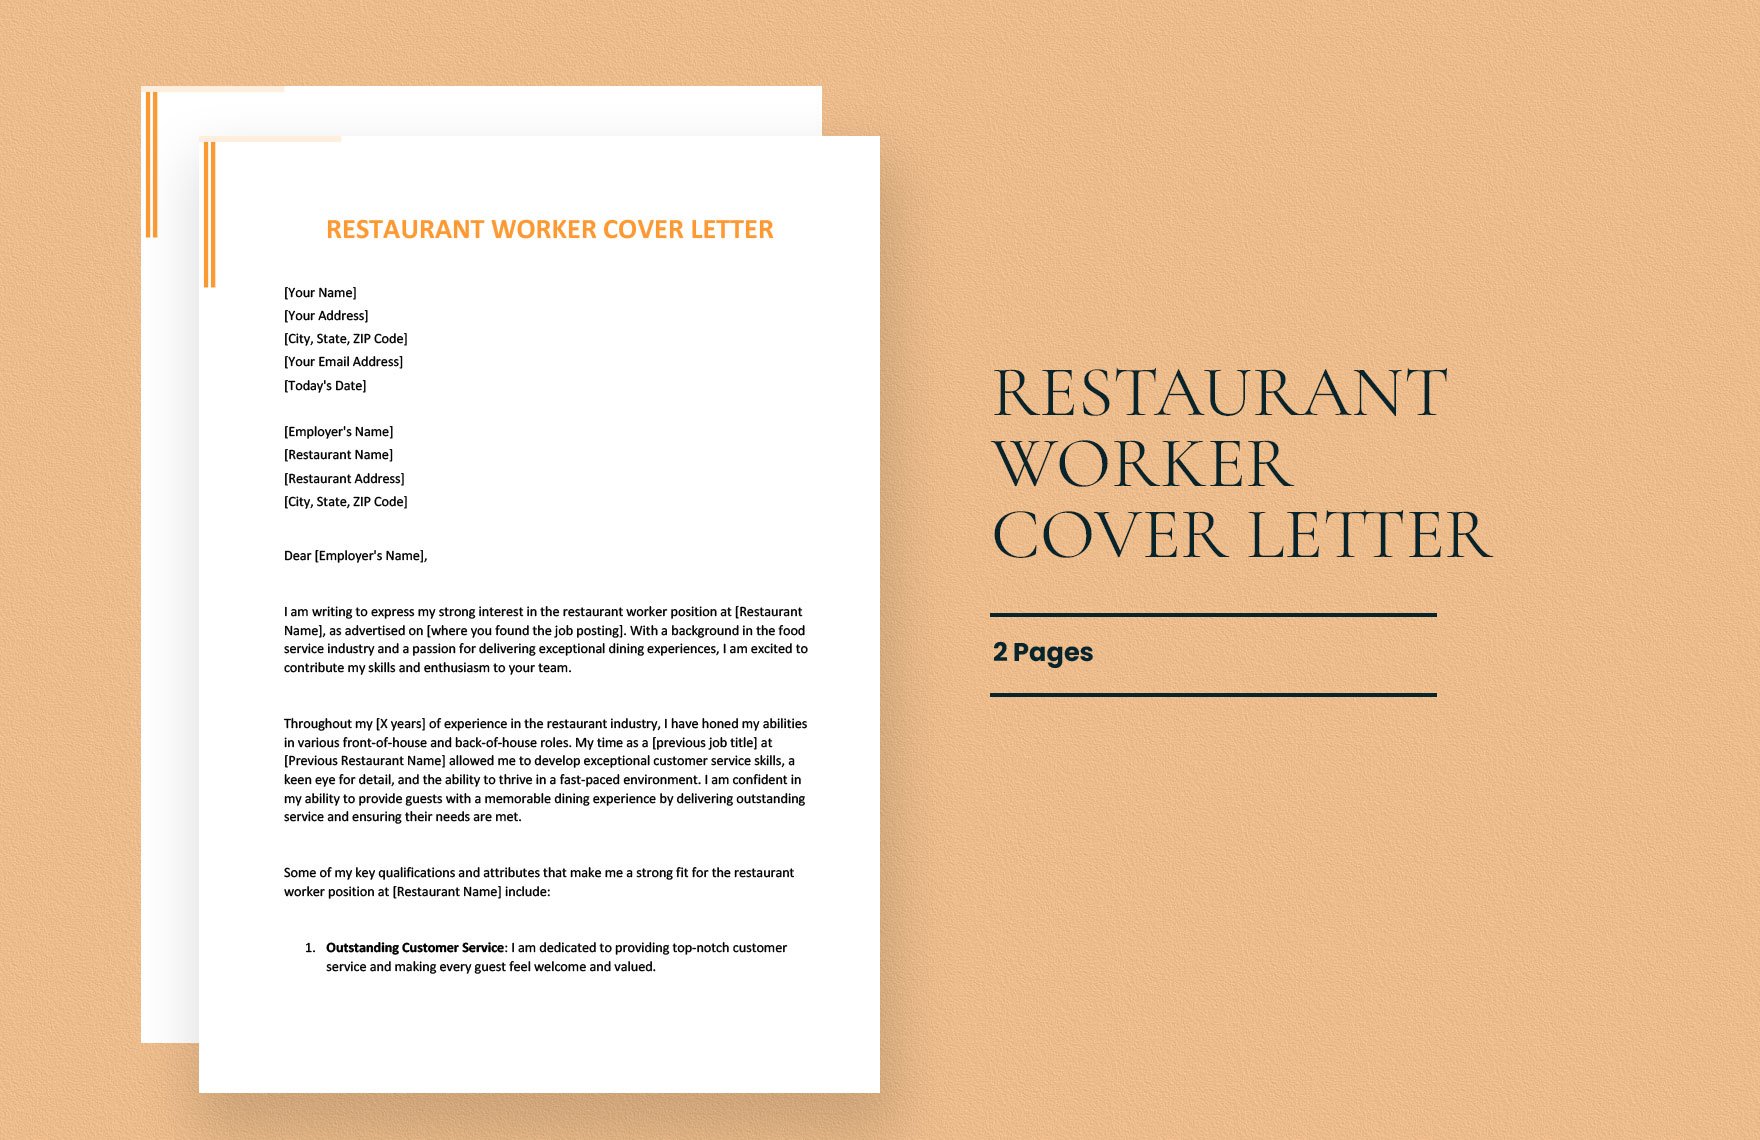 Restaurant Worker Cover Letter in Word, Google Docs